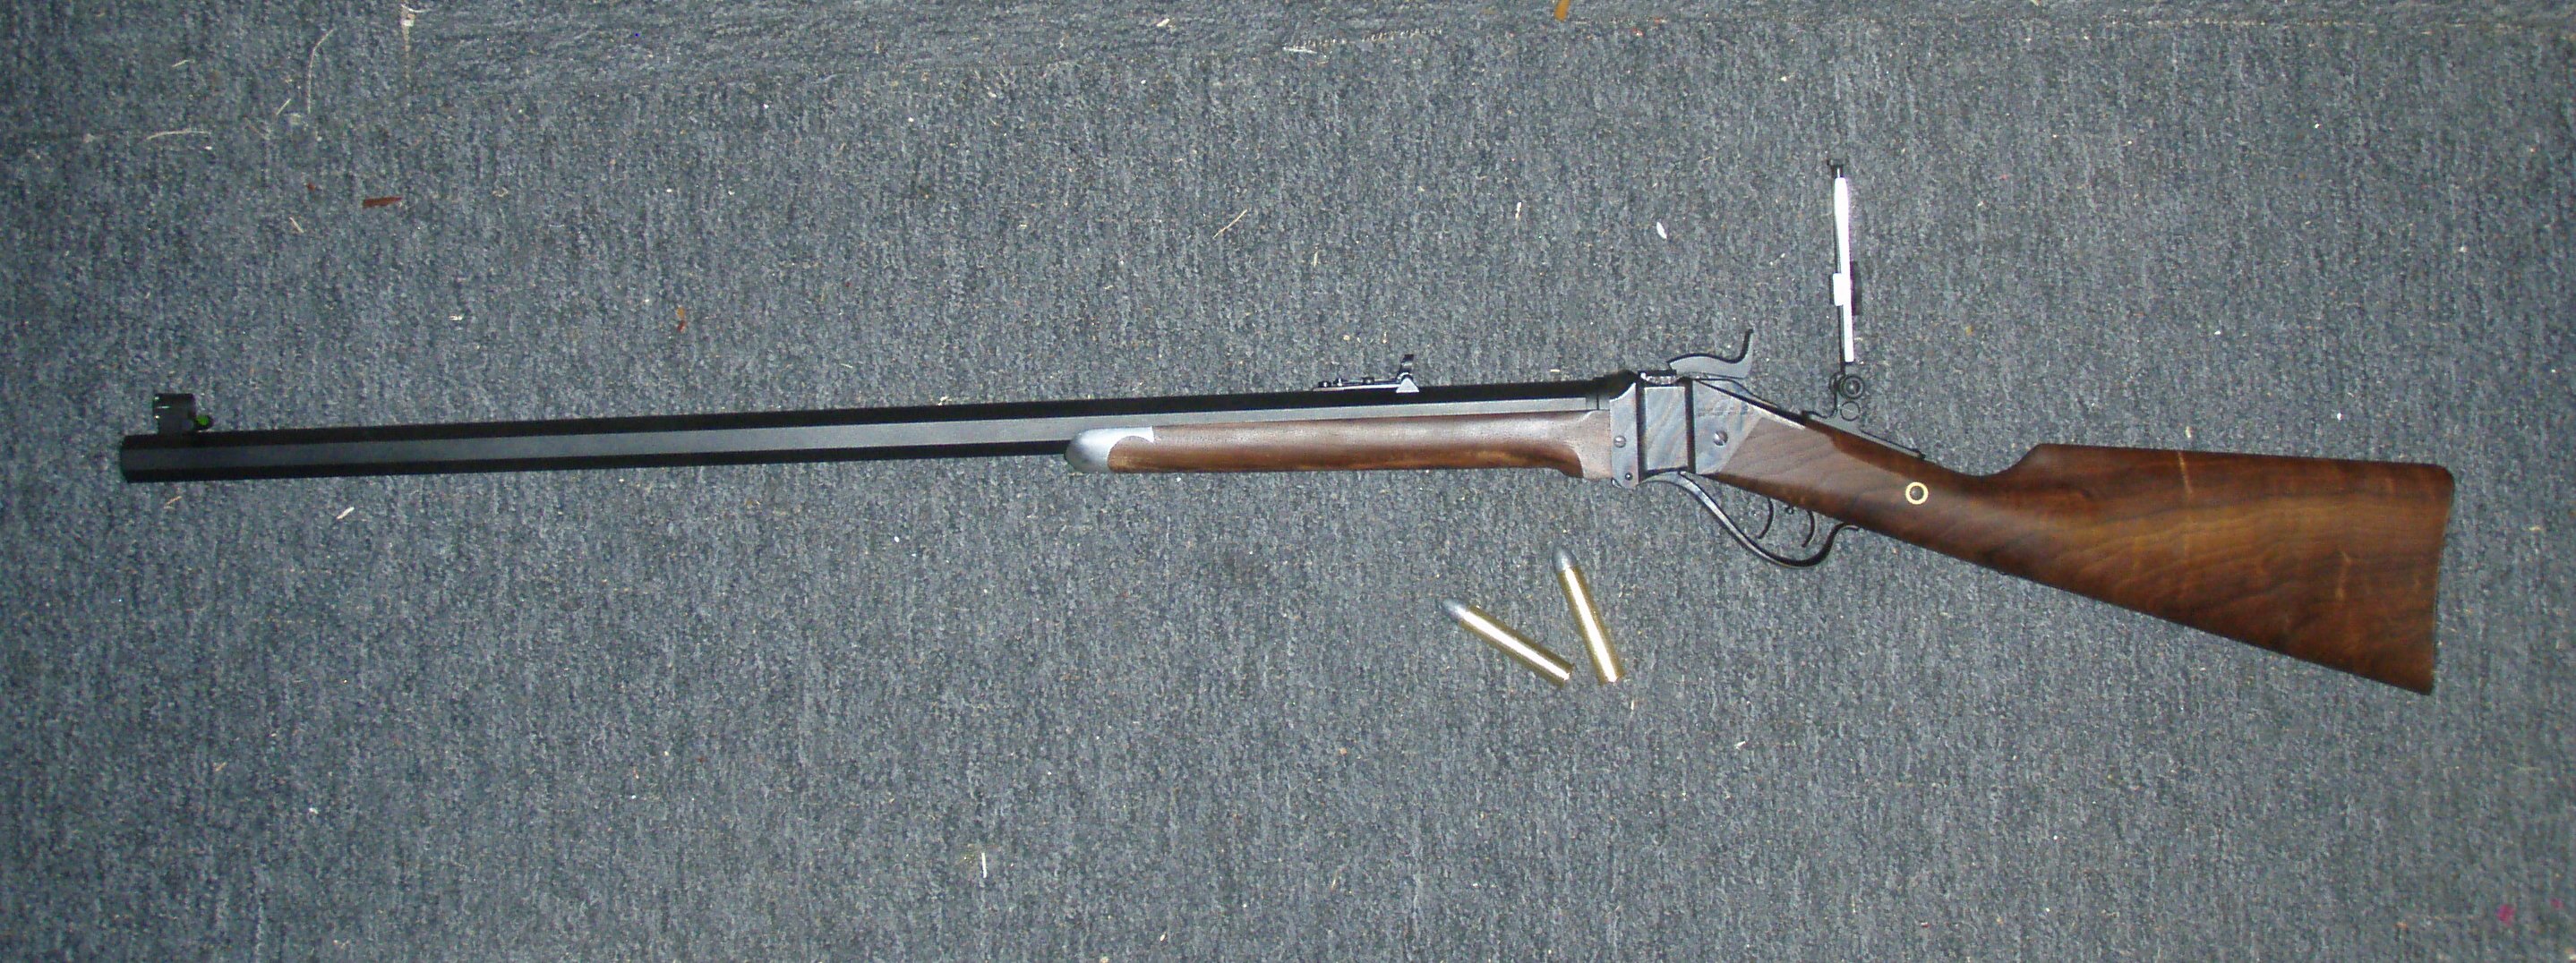 H&R Model Trapdoor Rifles  Owners Manual Reproduction 